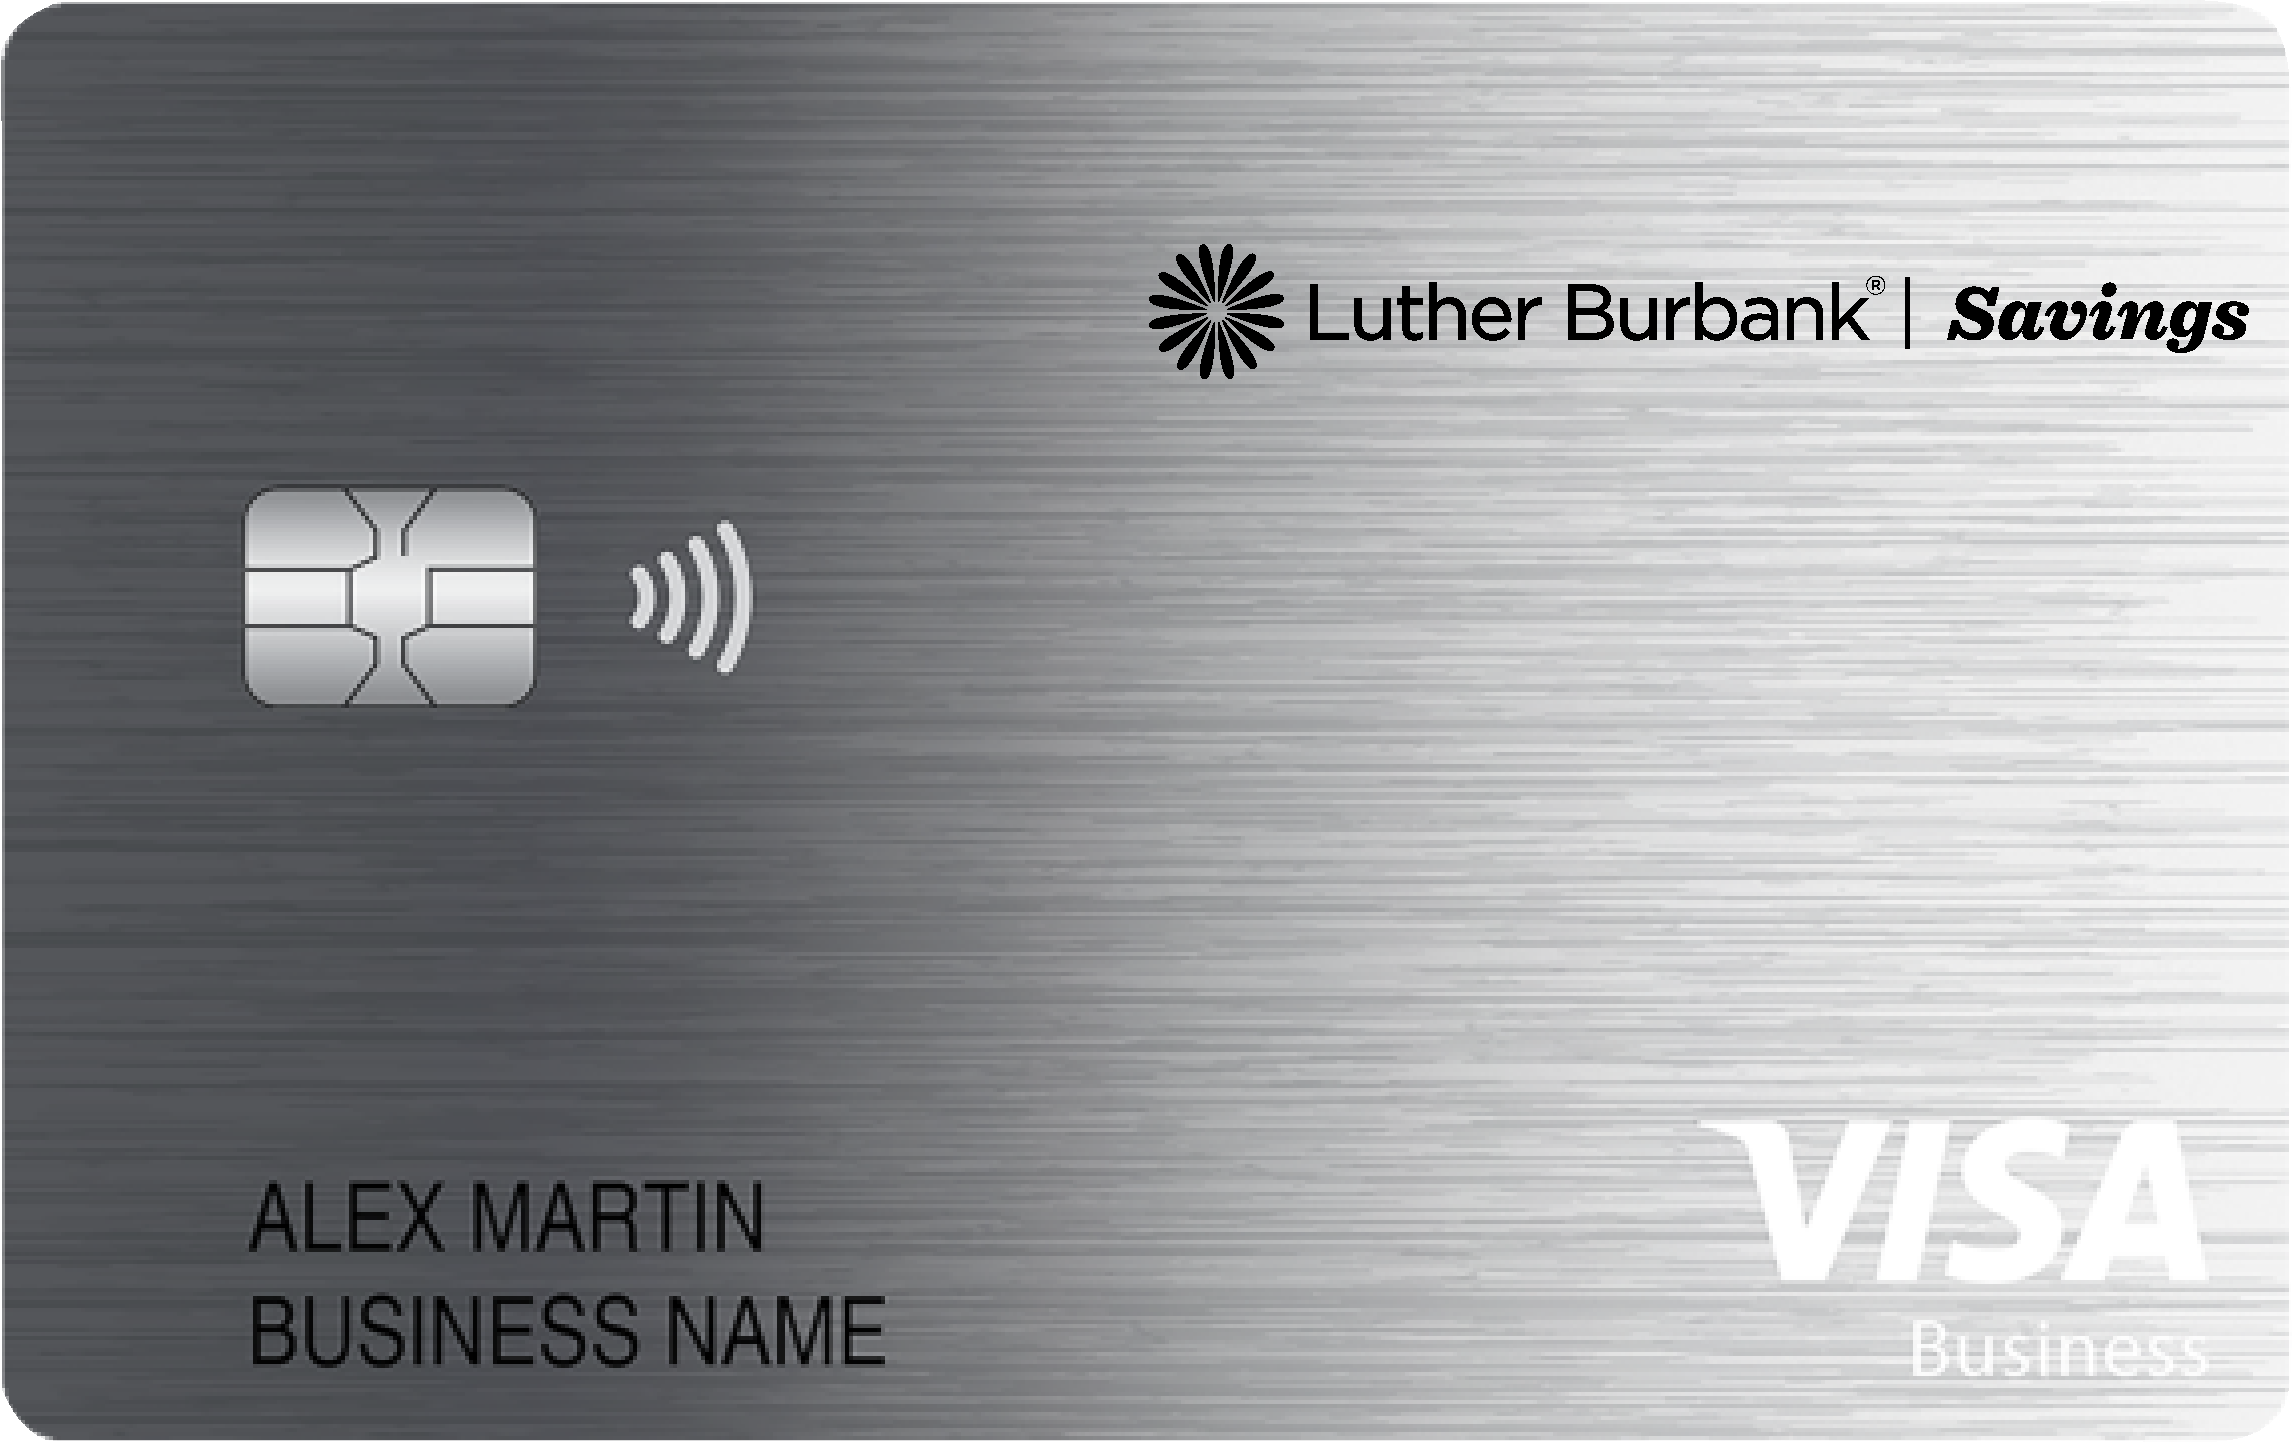 Luther Burbank Savings Business Real Rewards Card